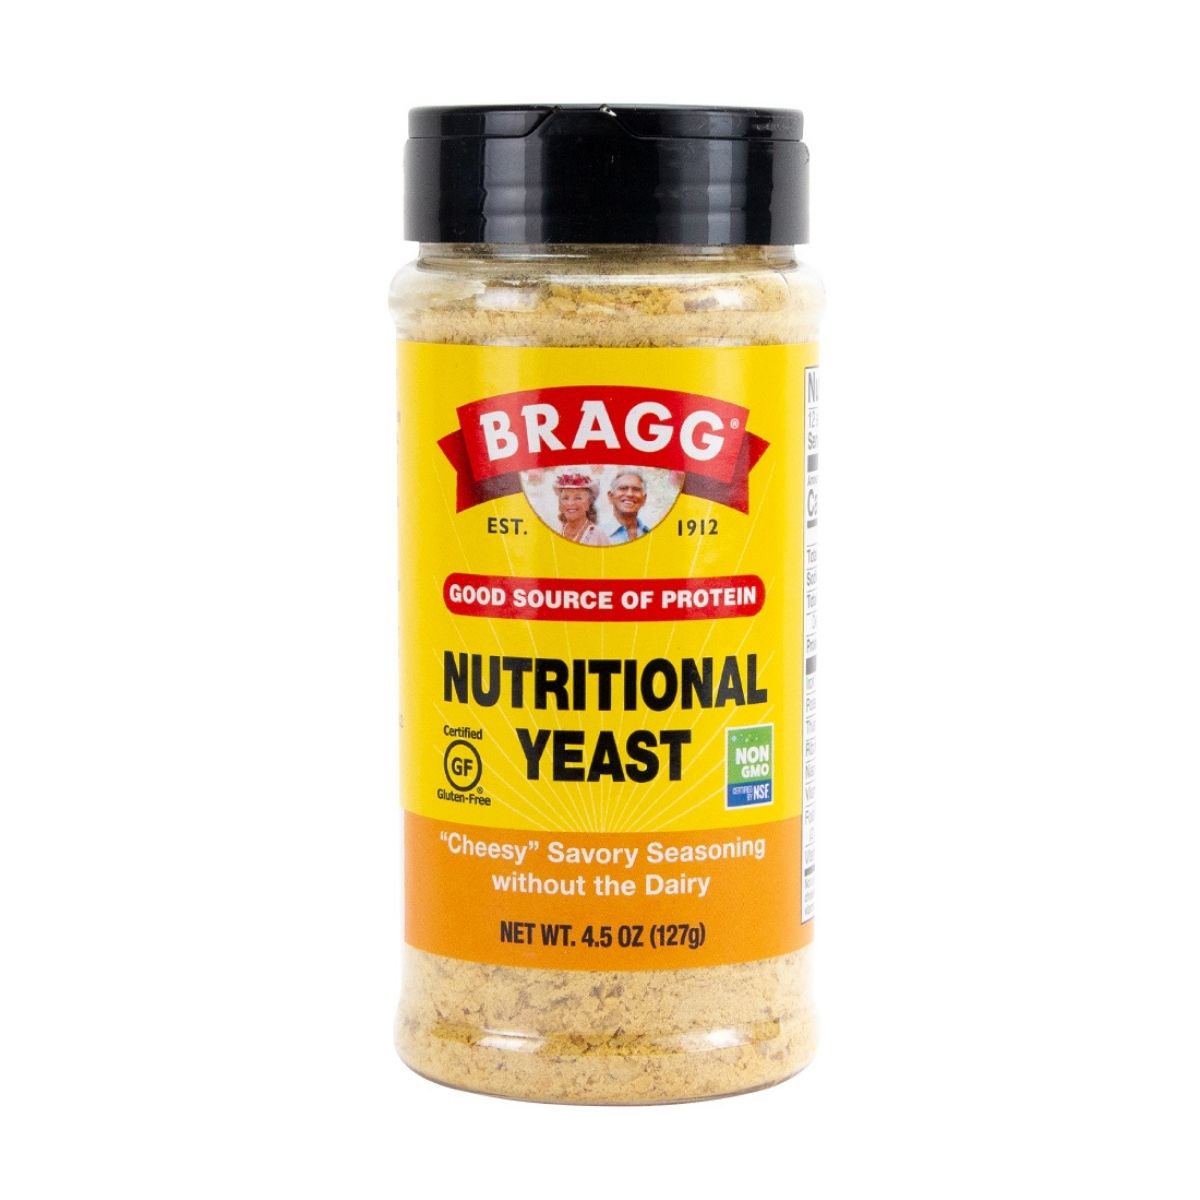 Men Dinh Dưỡng Nutritional Yeast 127g - Bragg